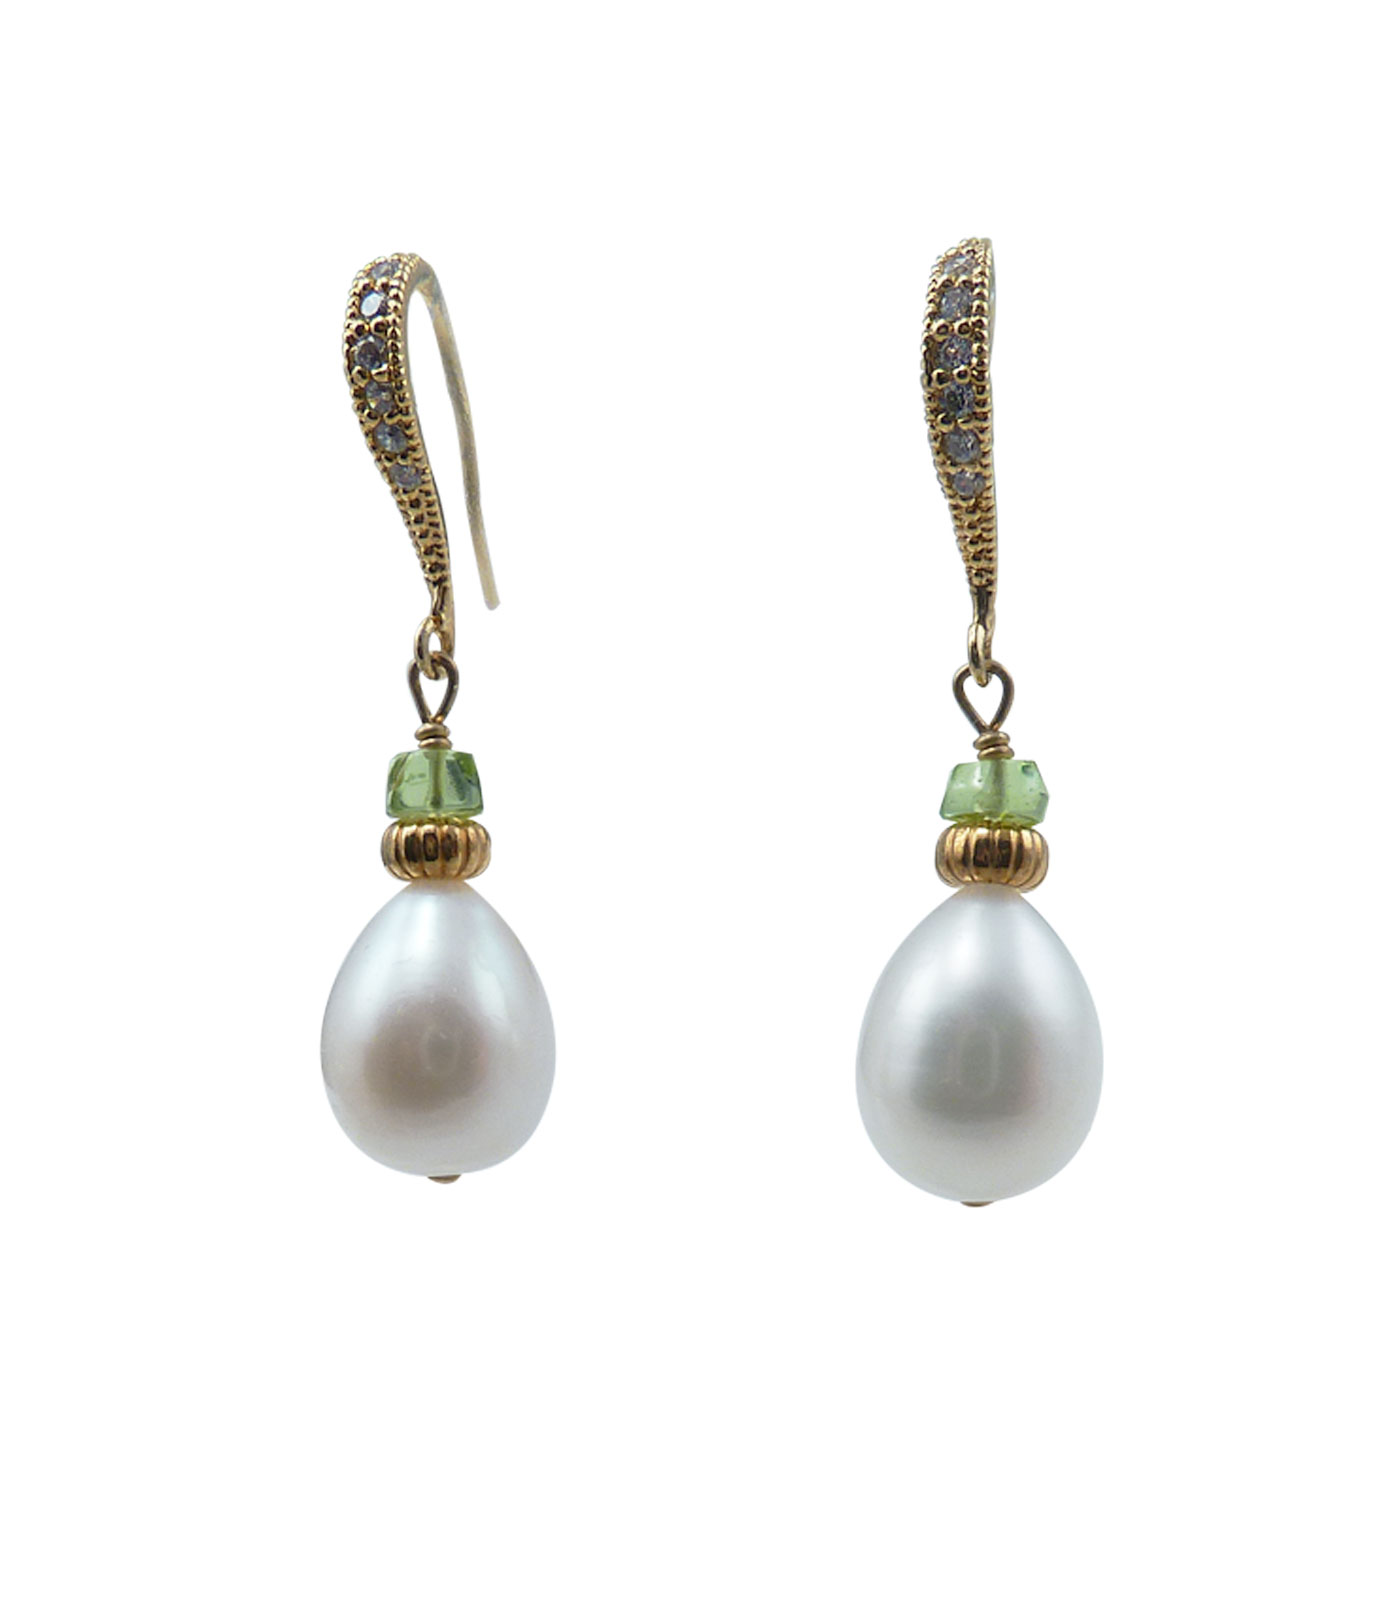 Designer pearl earrings peridot drop shaped white pearls